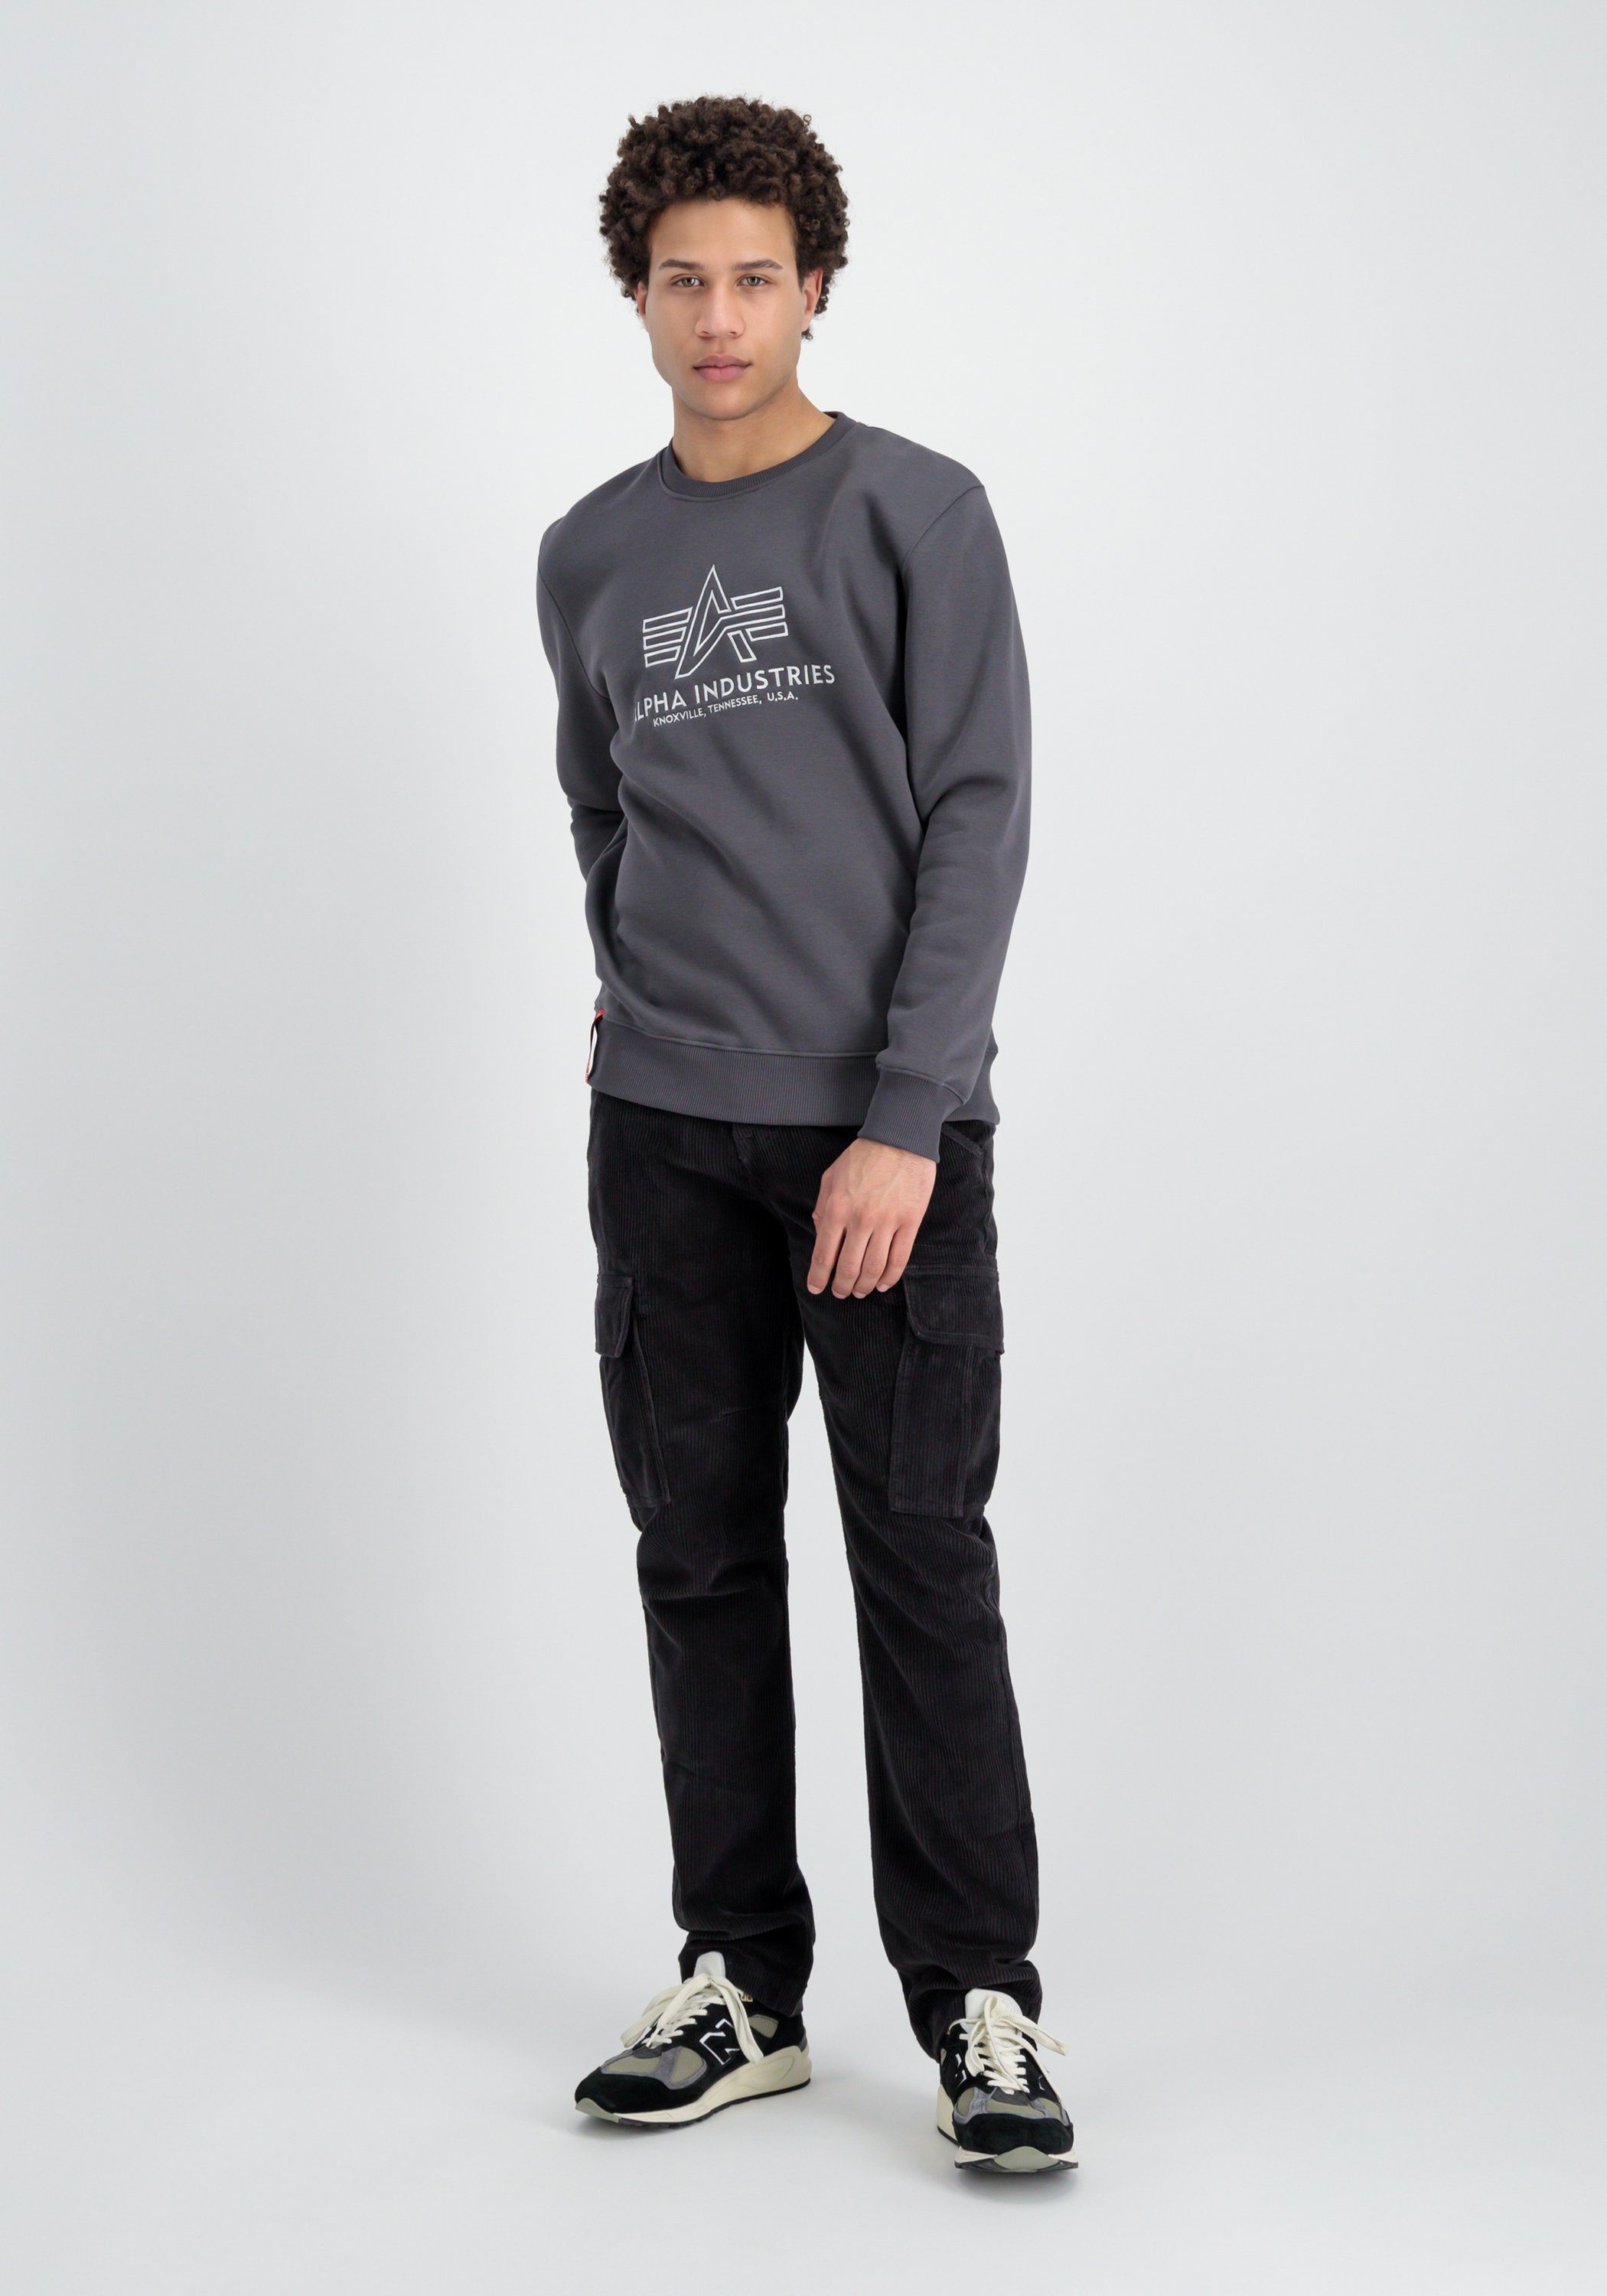 Sweater Basic Alpha Alpha grey Sweatshirts vintage Industries - Embroidery Men Industries Sweater